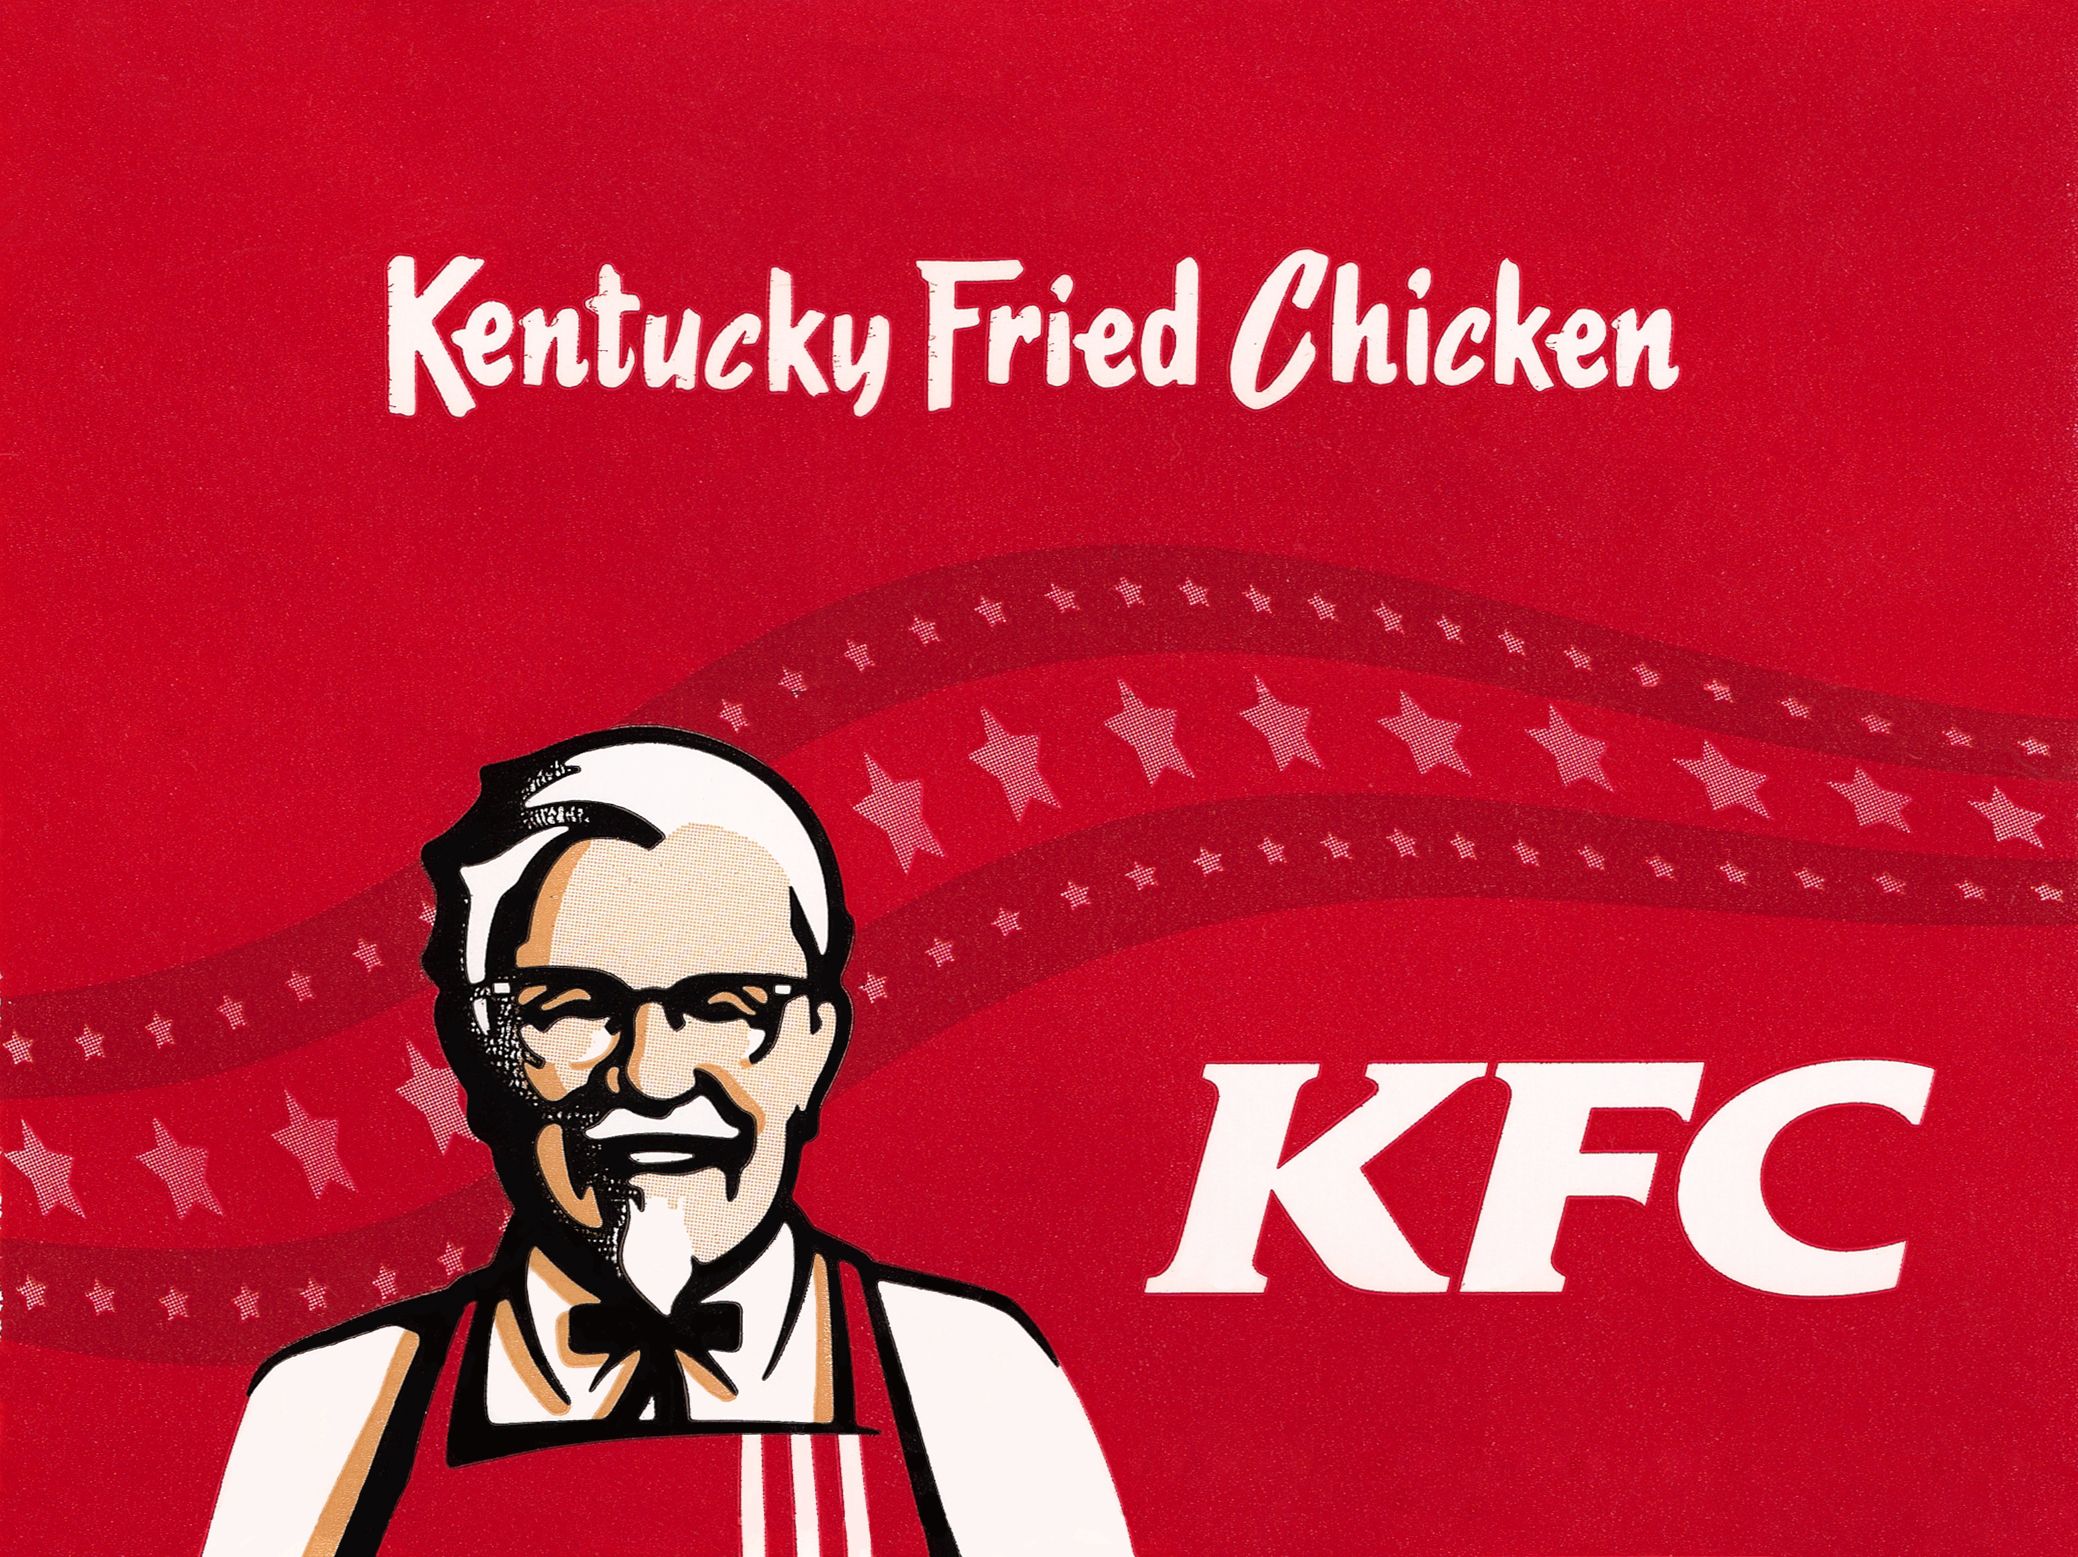 KFC Wallpaper. KFC Chicken Wallpaper, KFC Wallpaper and Louisville KFC Yum Center Wallpaper